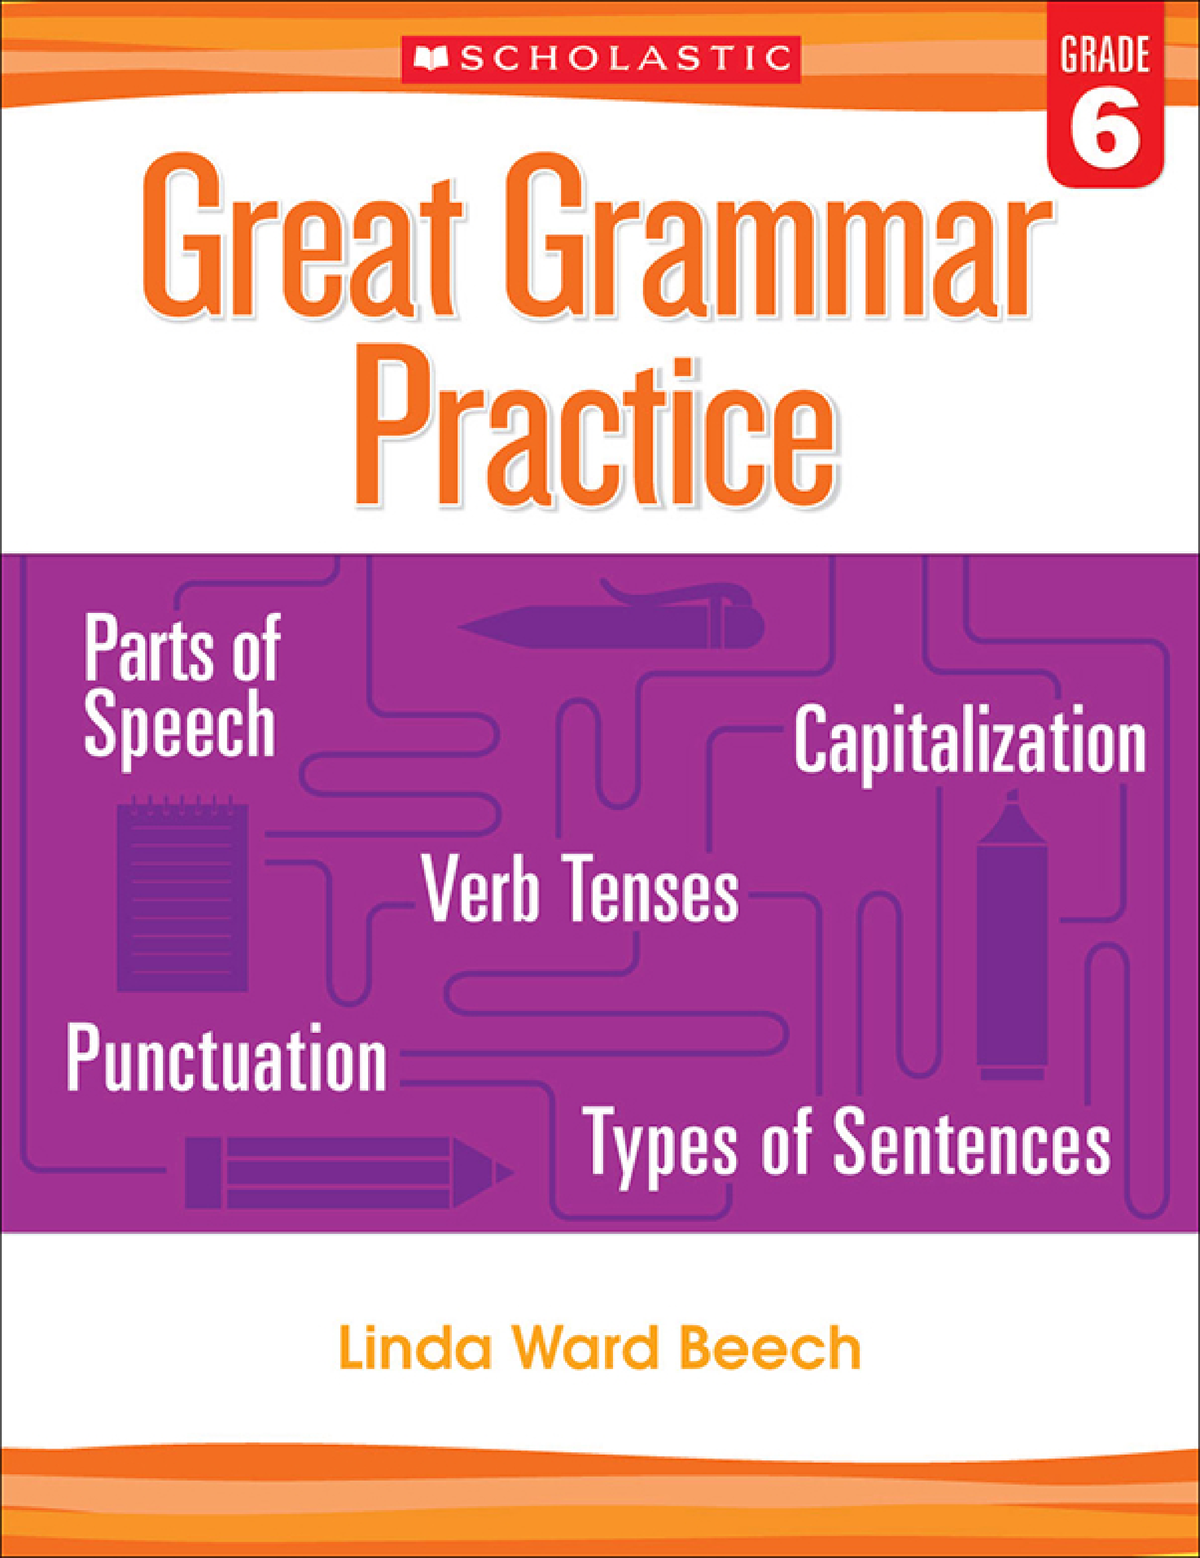 Great grammar practice grade 6 - scholastic - Scholastic Inc. grants ...